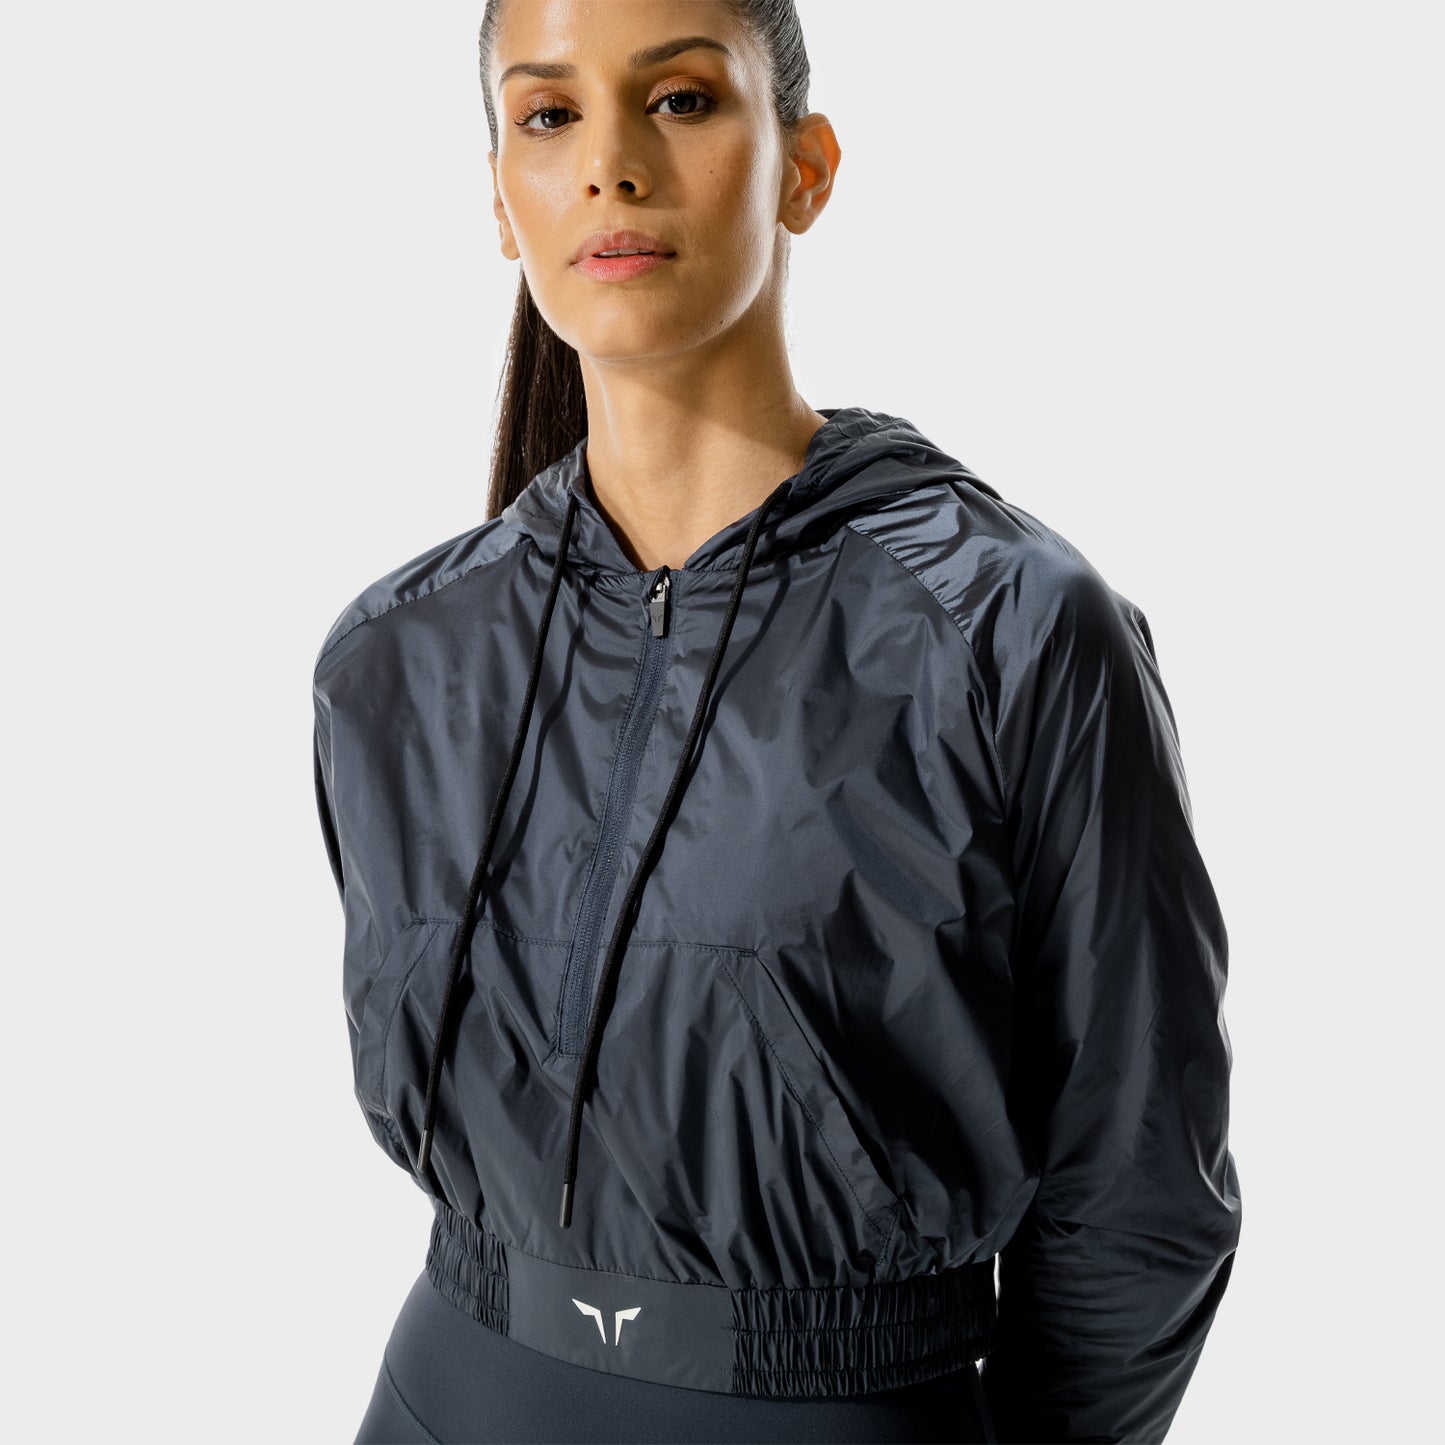 squatwolf-gym-hoodies-women-lab-360-crop-jacket-blue-nights-workout-clothes